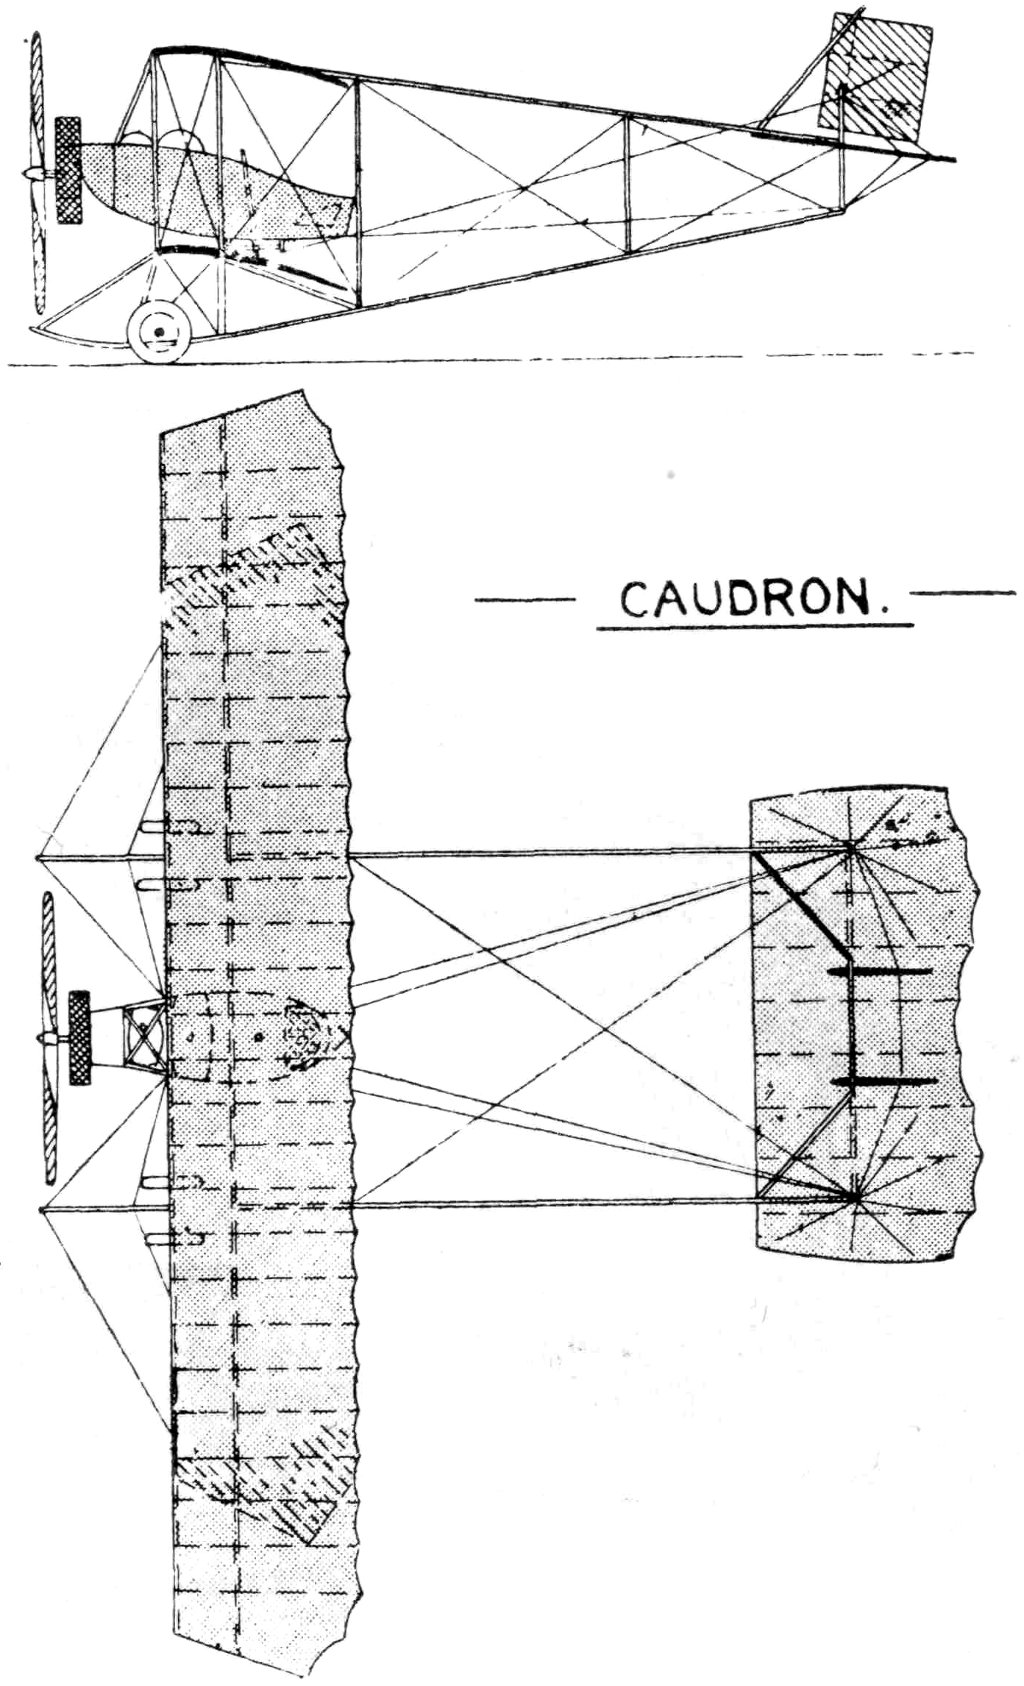 CAUDRON. Uniform Aeroplane Scale